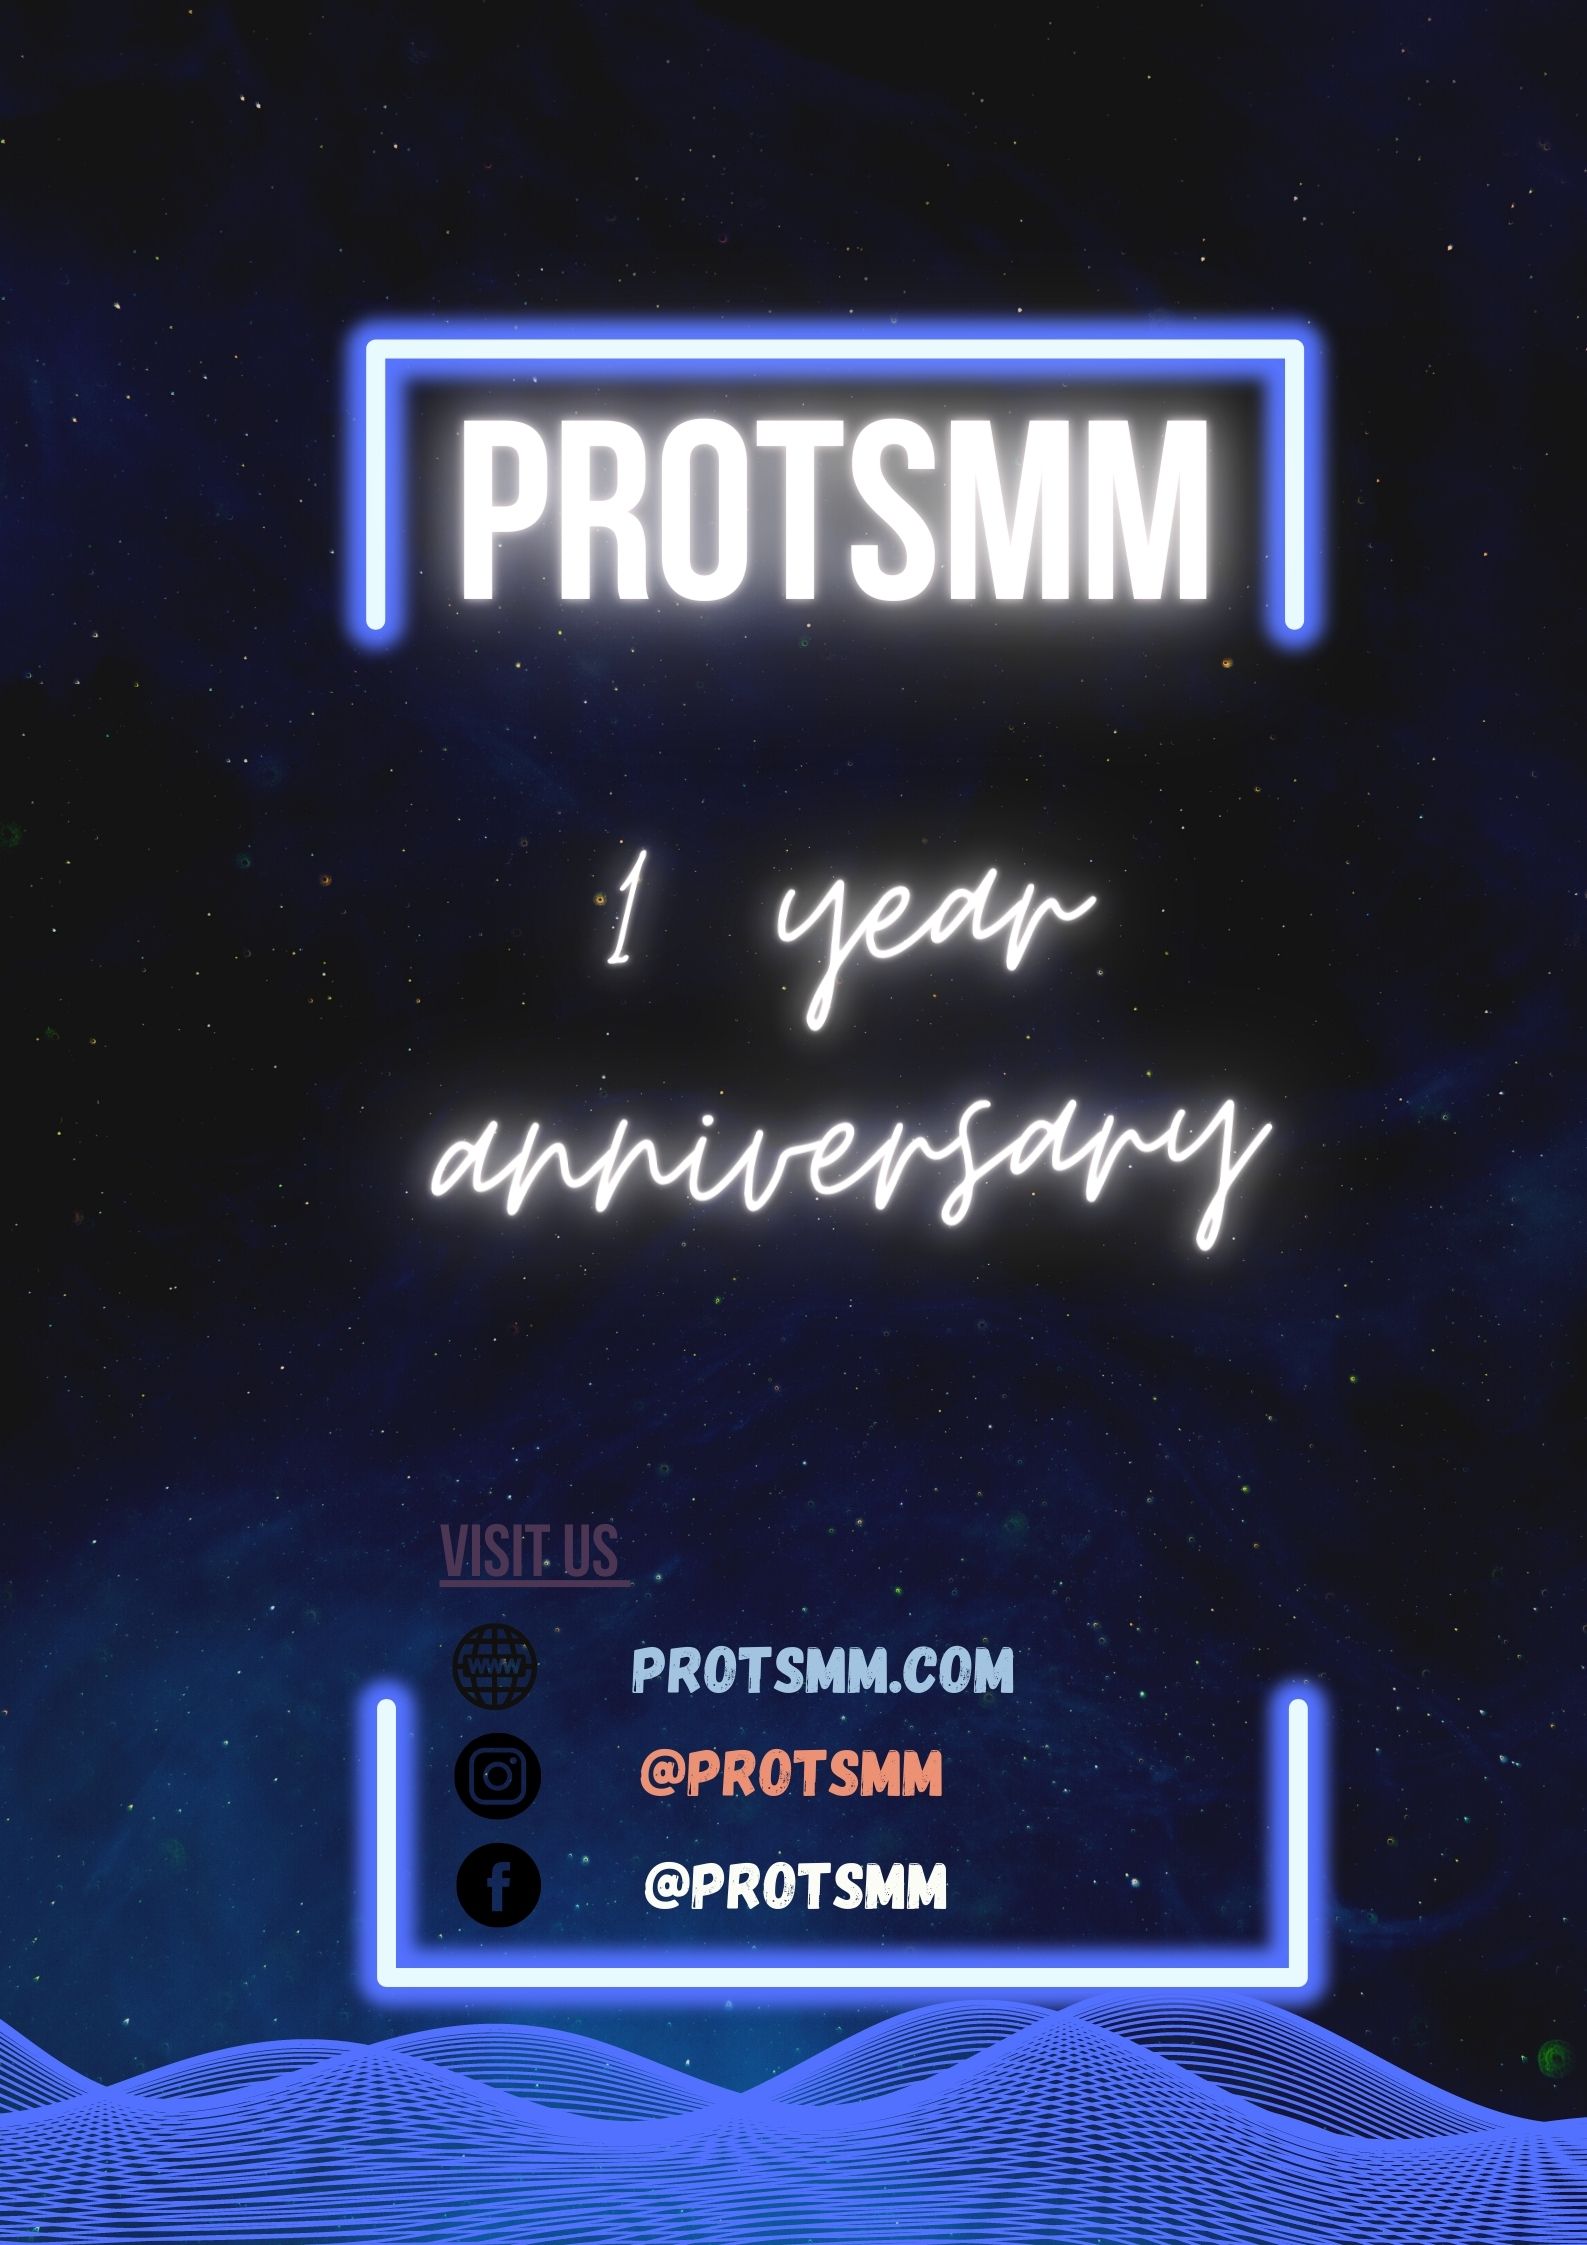 ProtSMM.com